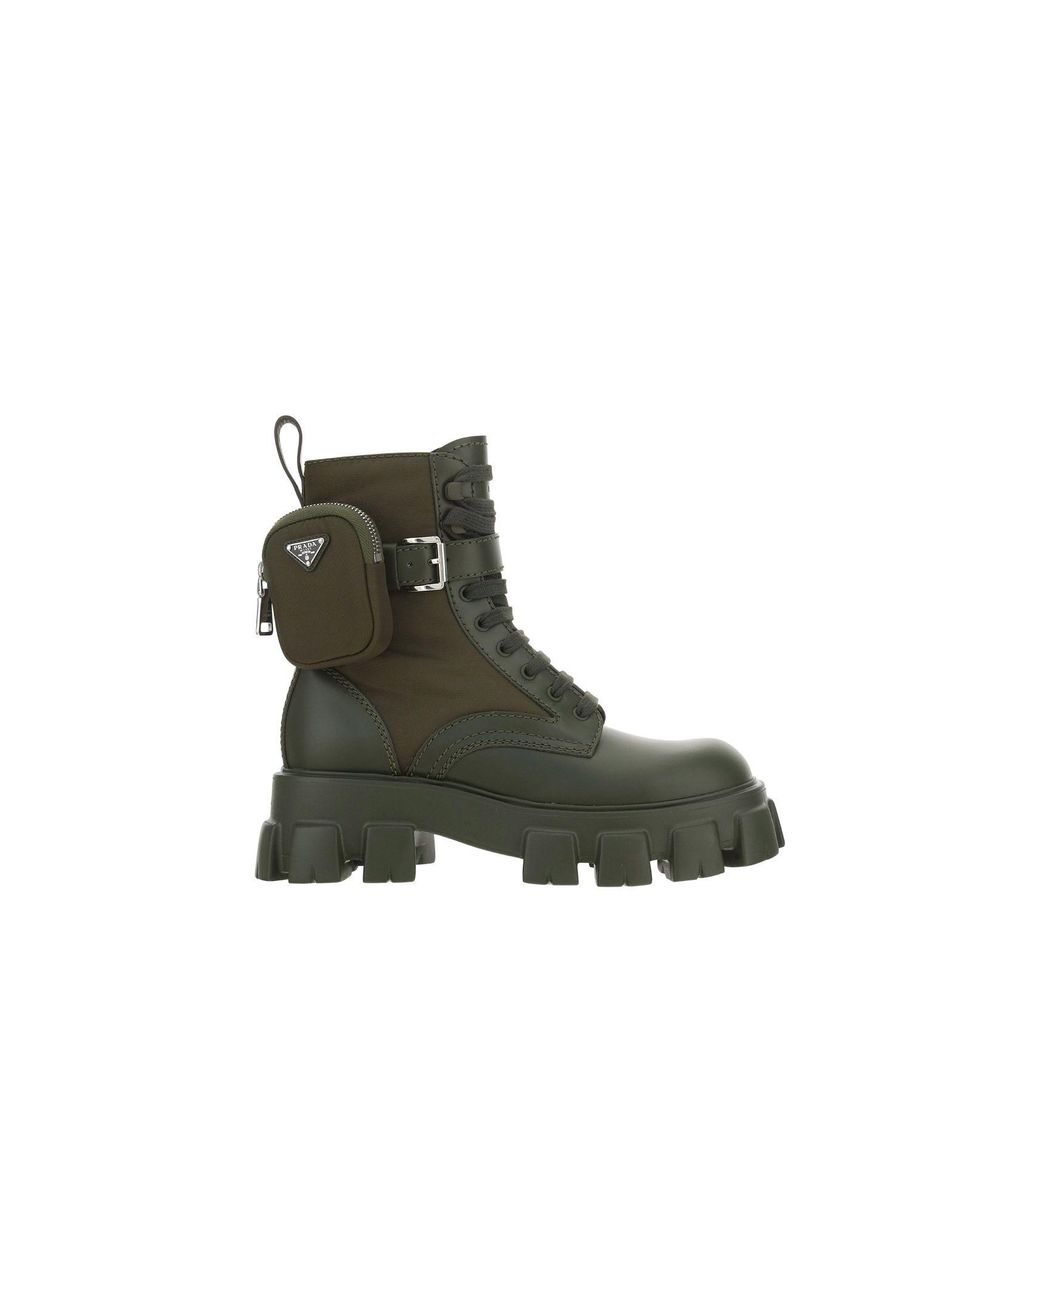 Prada Leather Monolith Boots for Men | Lyst Australia